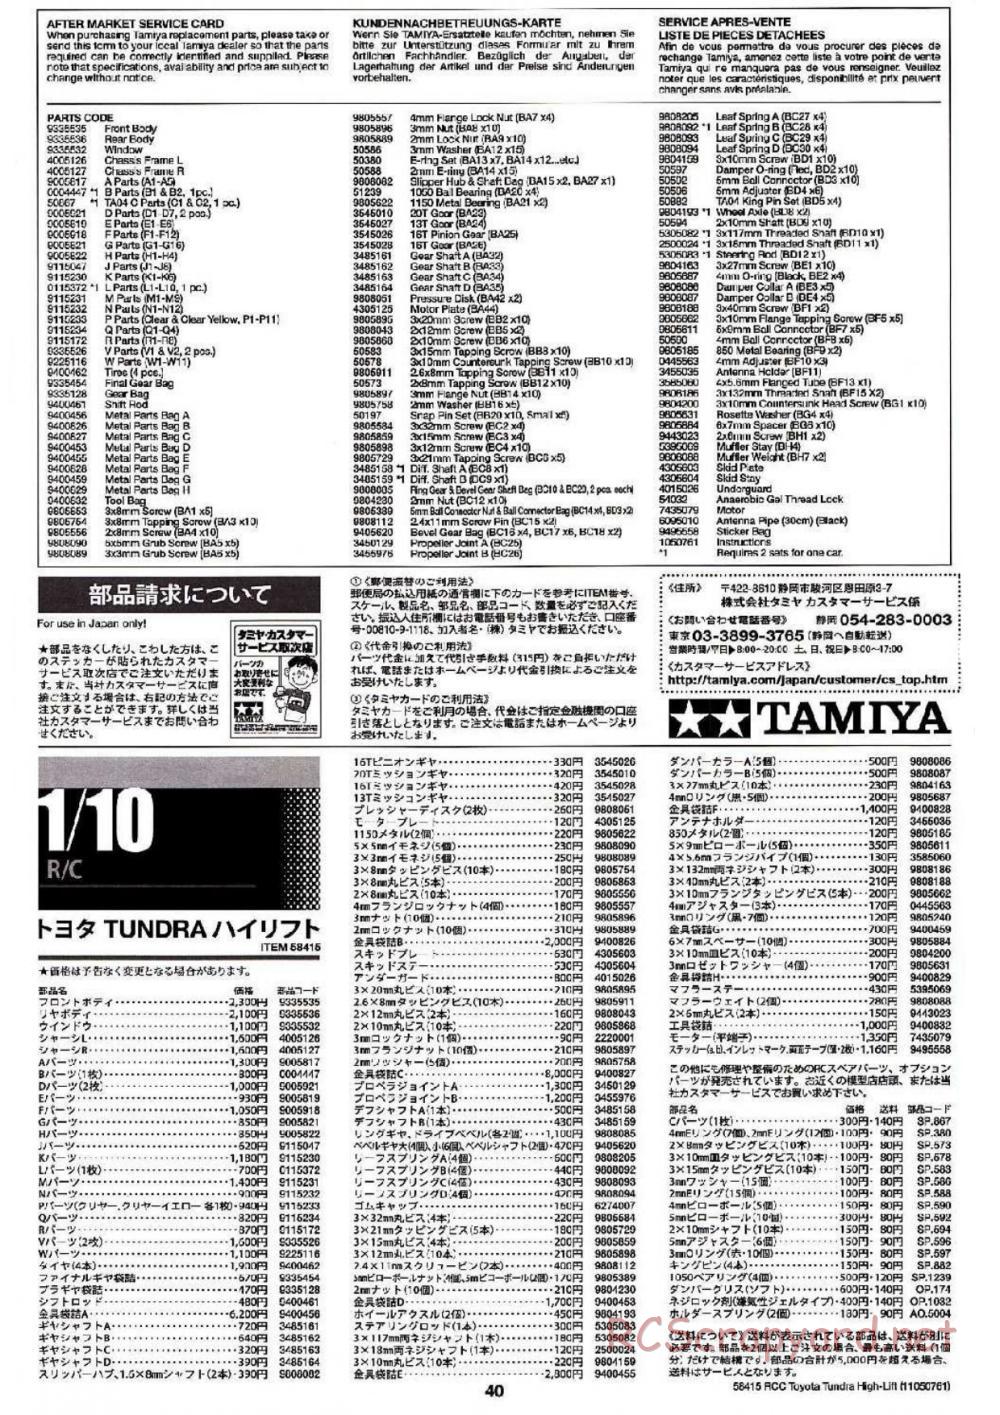 Tamiya - Toyota Tundra High-Lift Chassis - Manual - Page 40